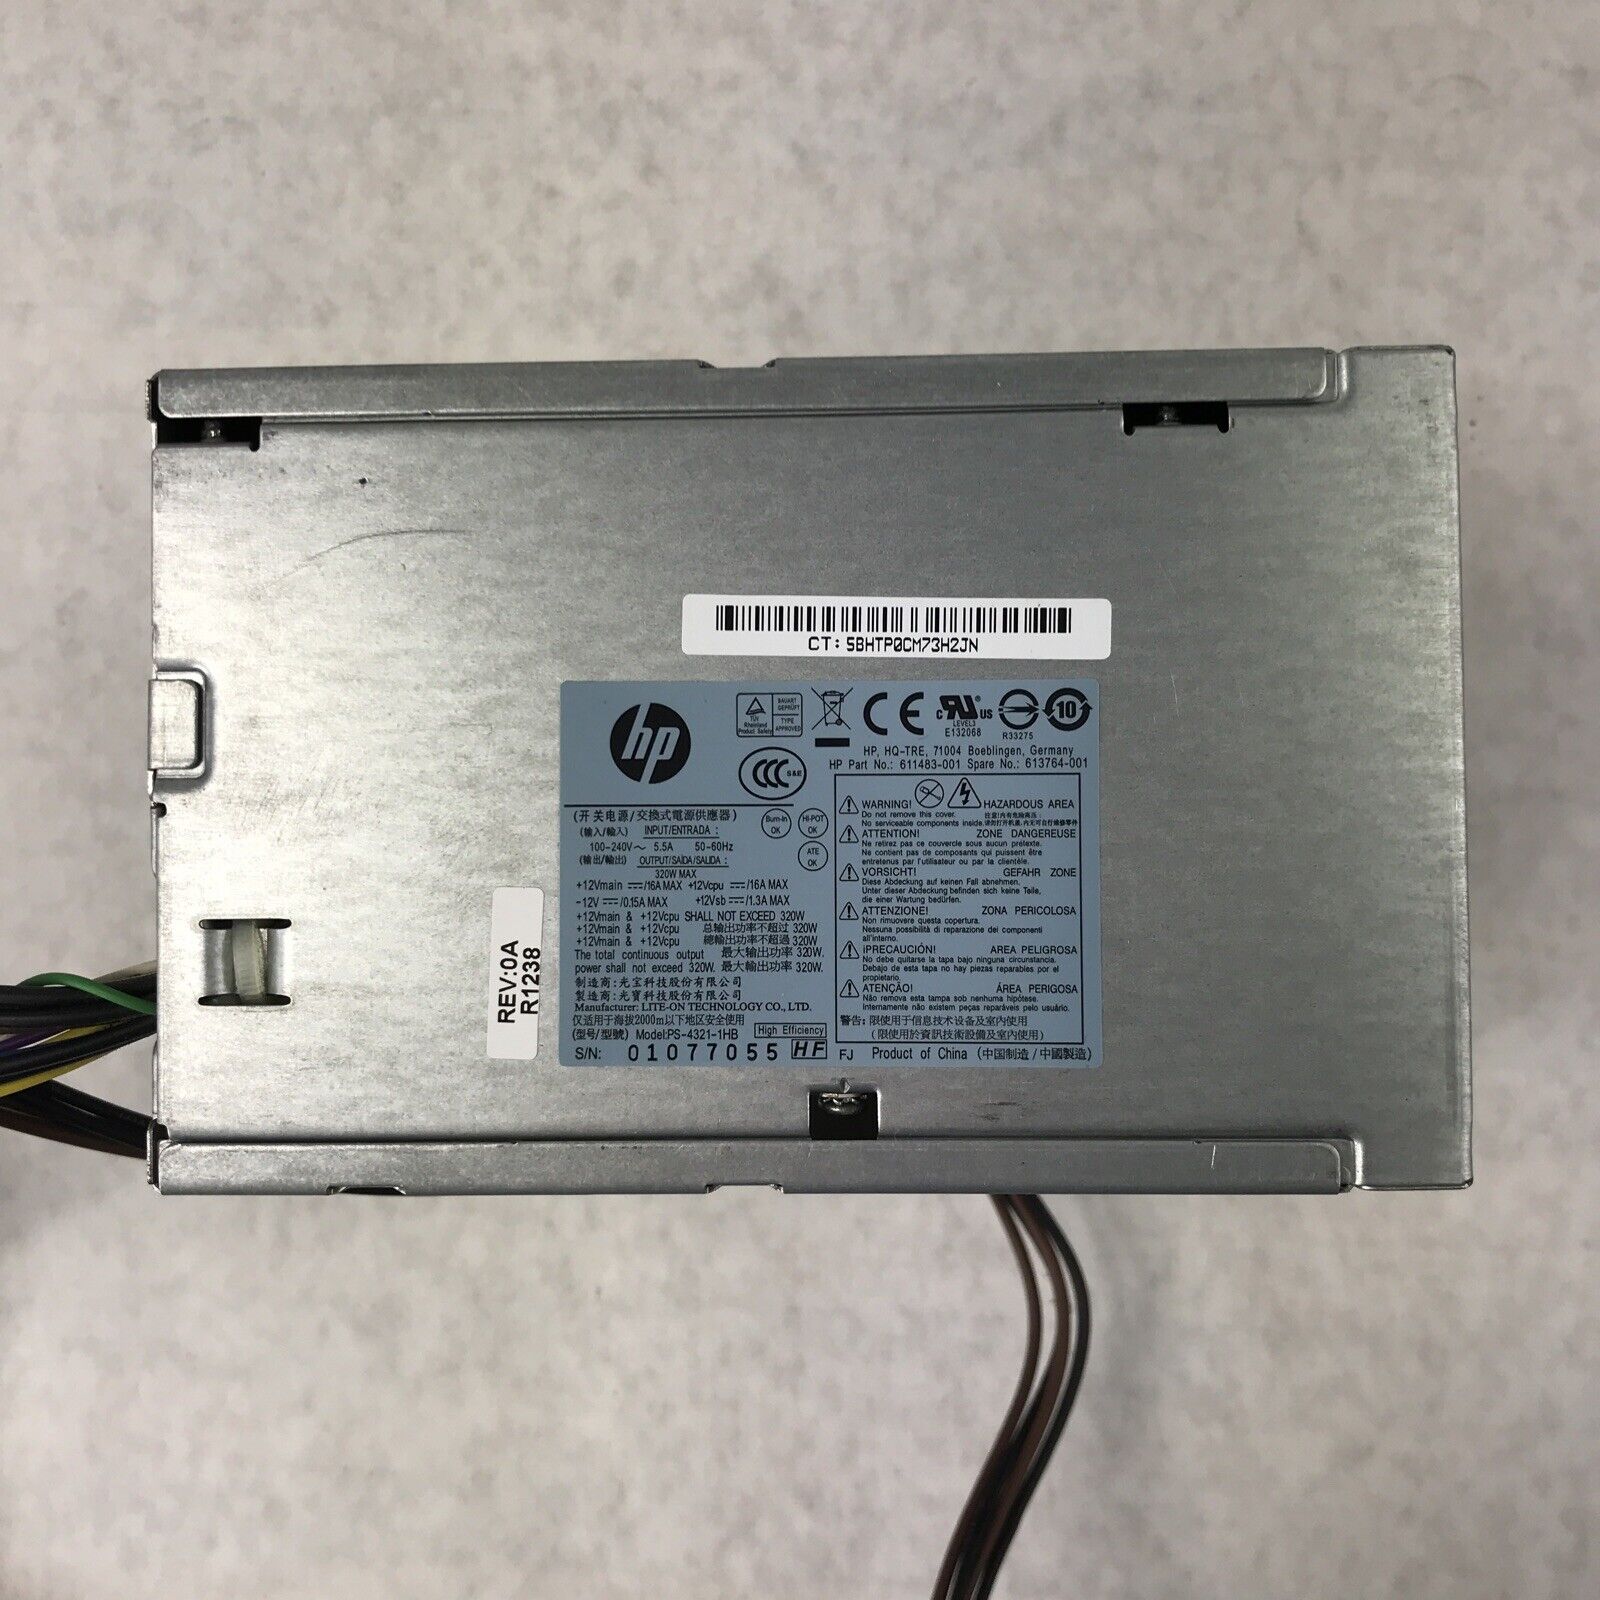 HP PS-4321-1HB 320W Power Supply PSU 611483-001 613764-001